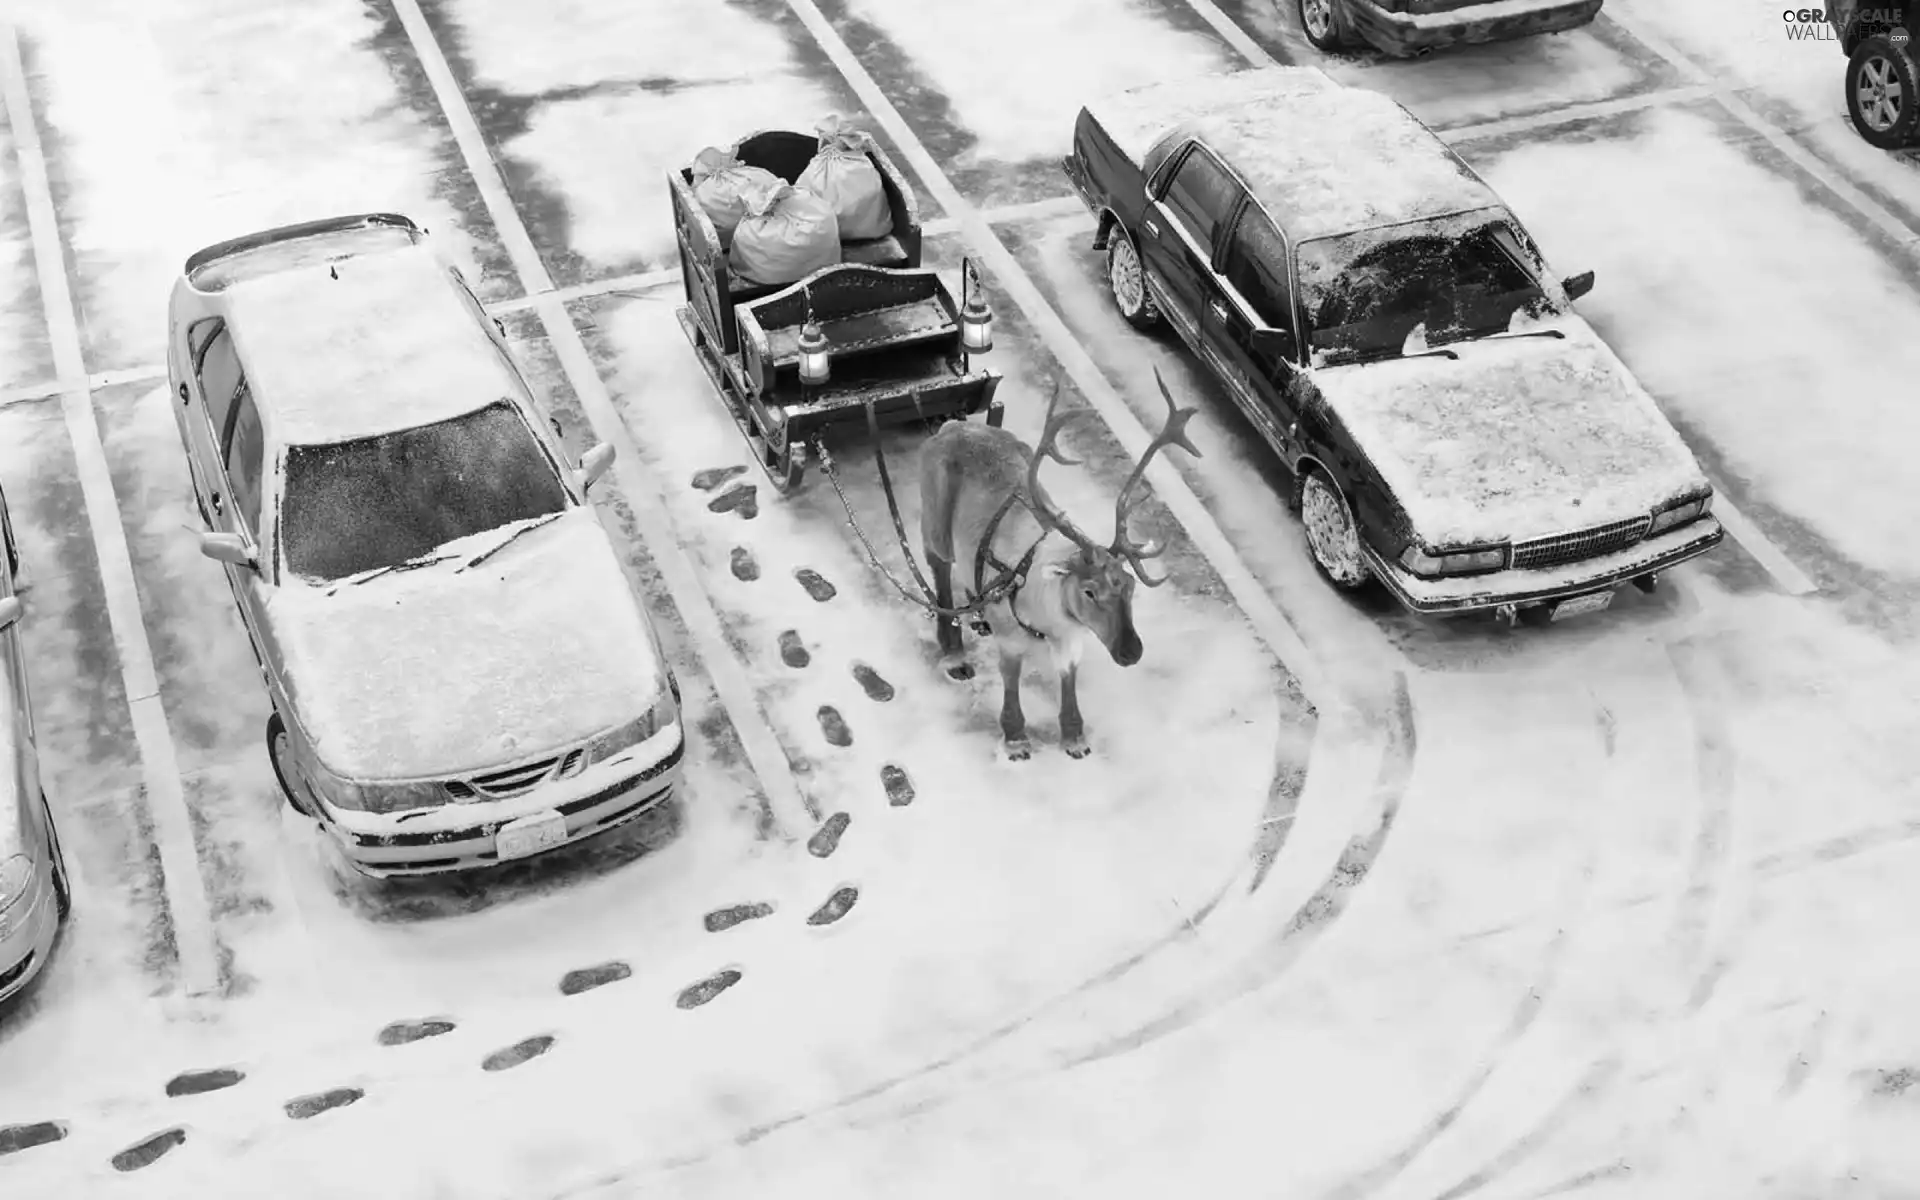 traces, winter, Santa, cars, reindeer, snow